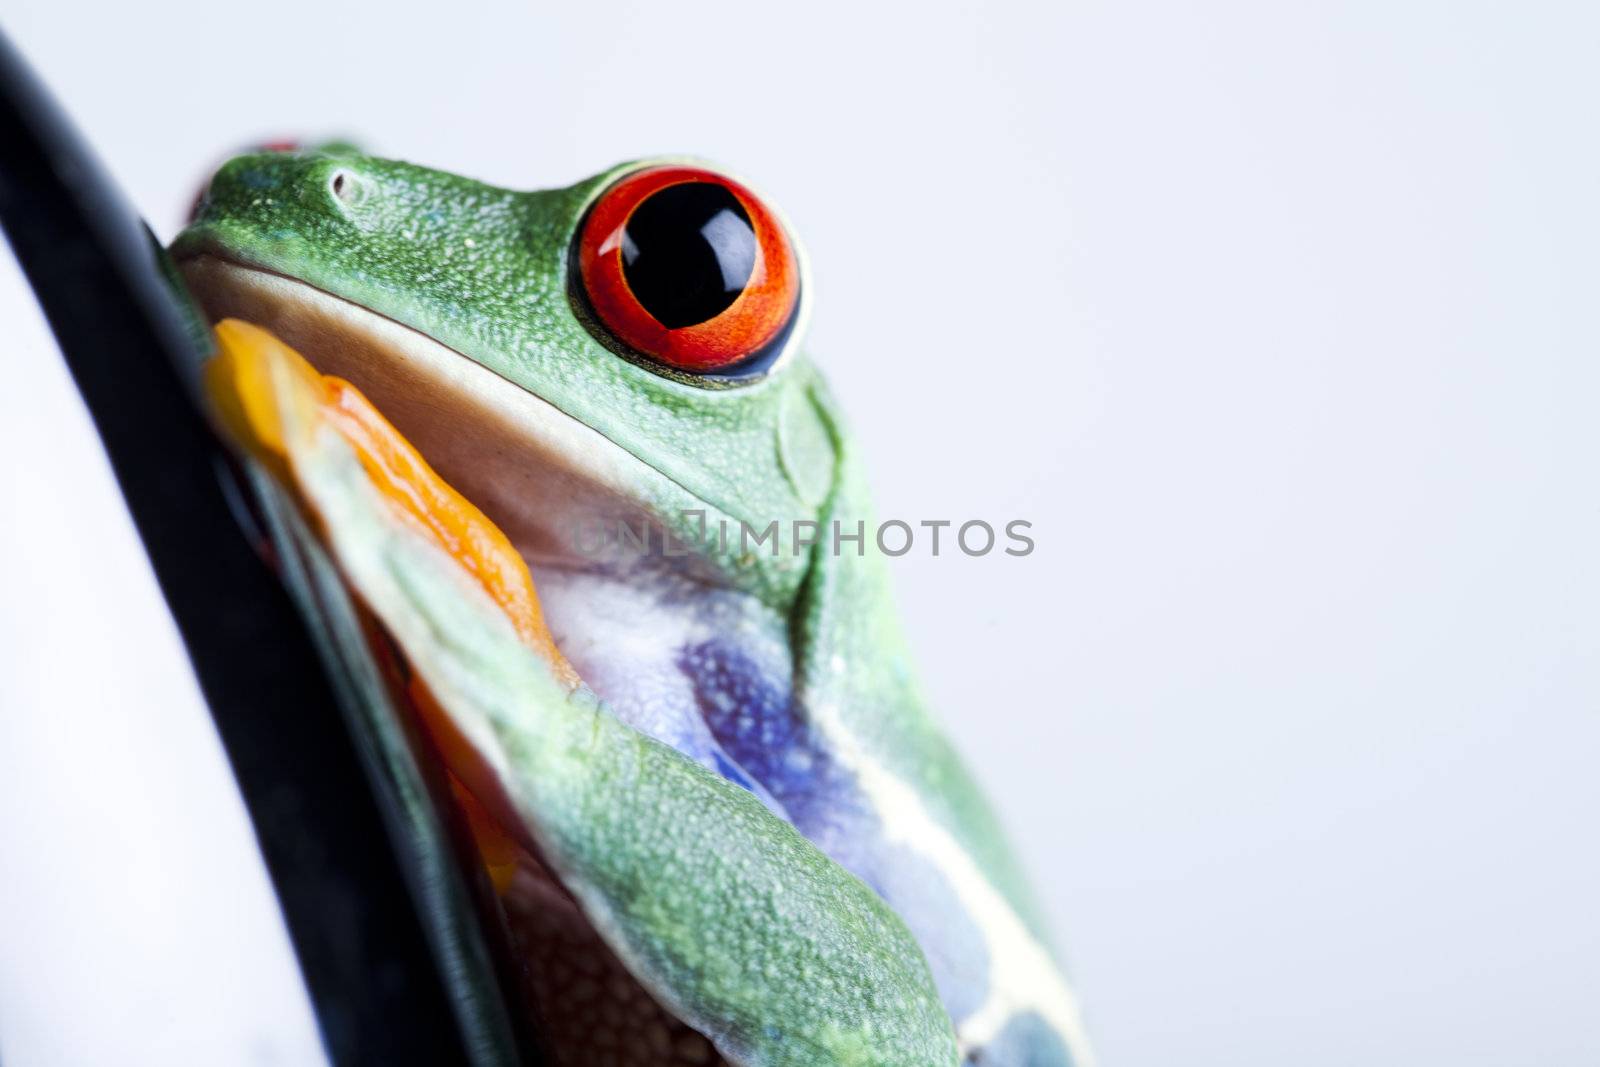  Frog - small animal red eyed by JanPietruszka